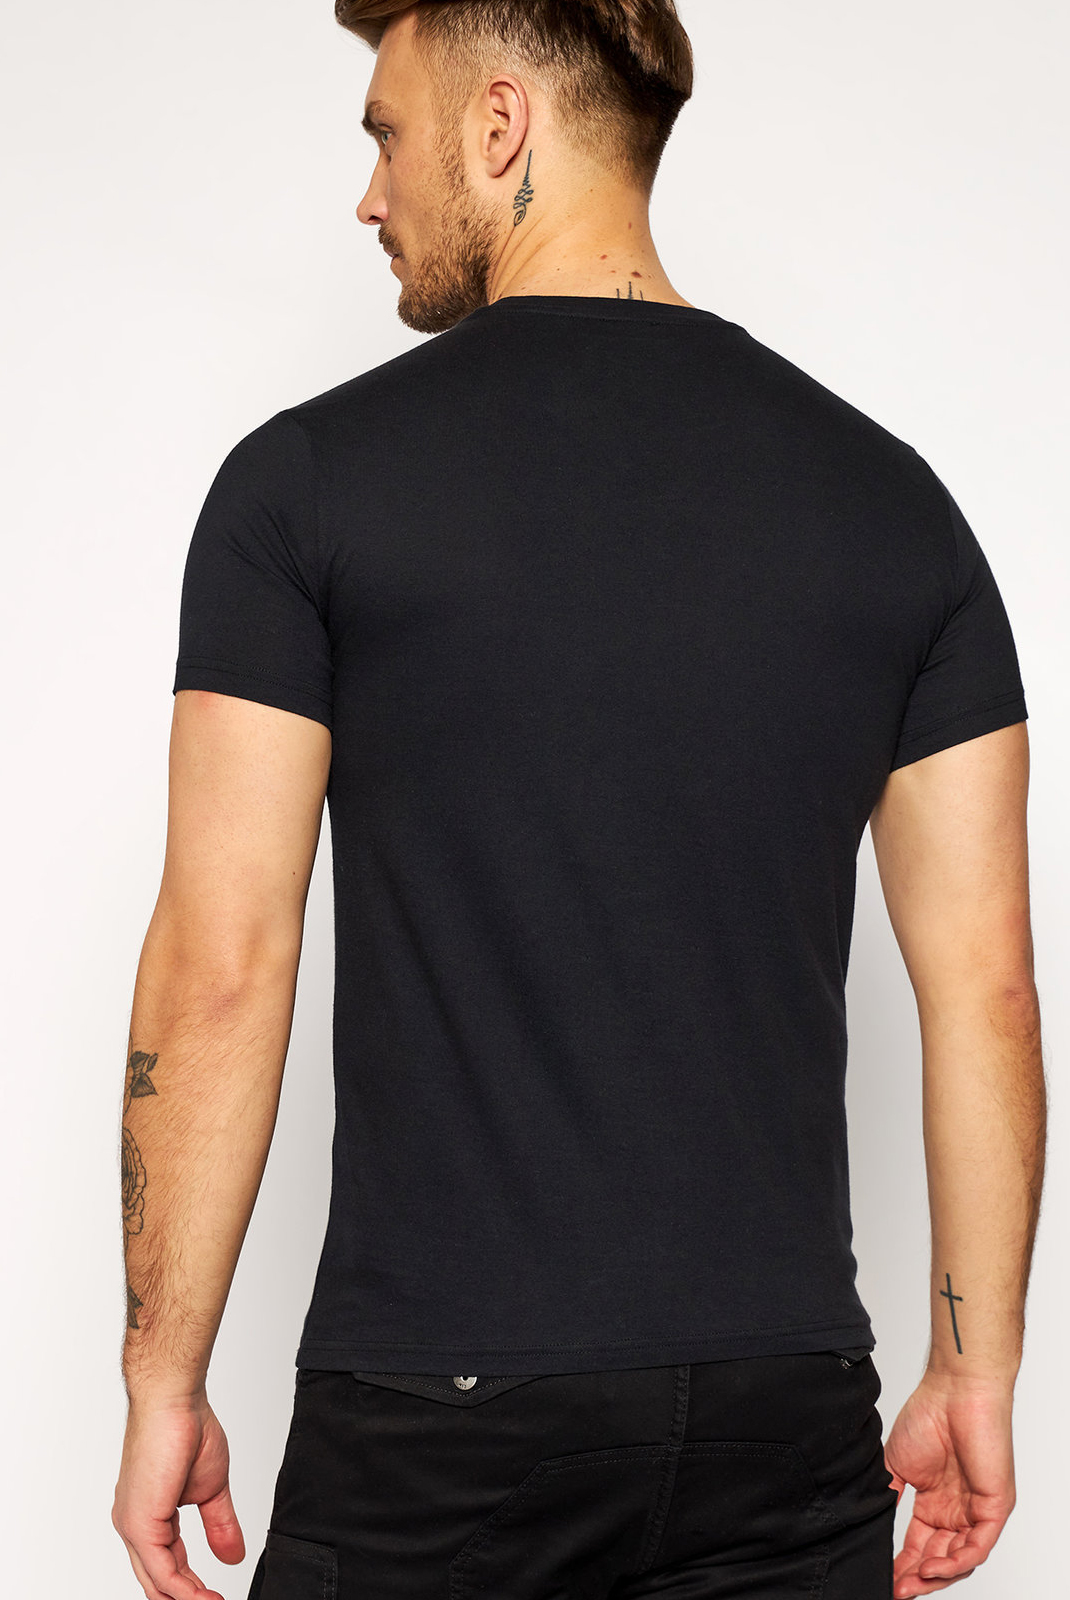  Tee-shirt noir regular fit Emporio Armani homme - 211831